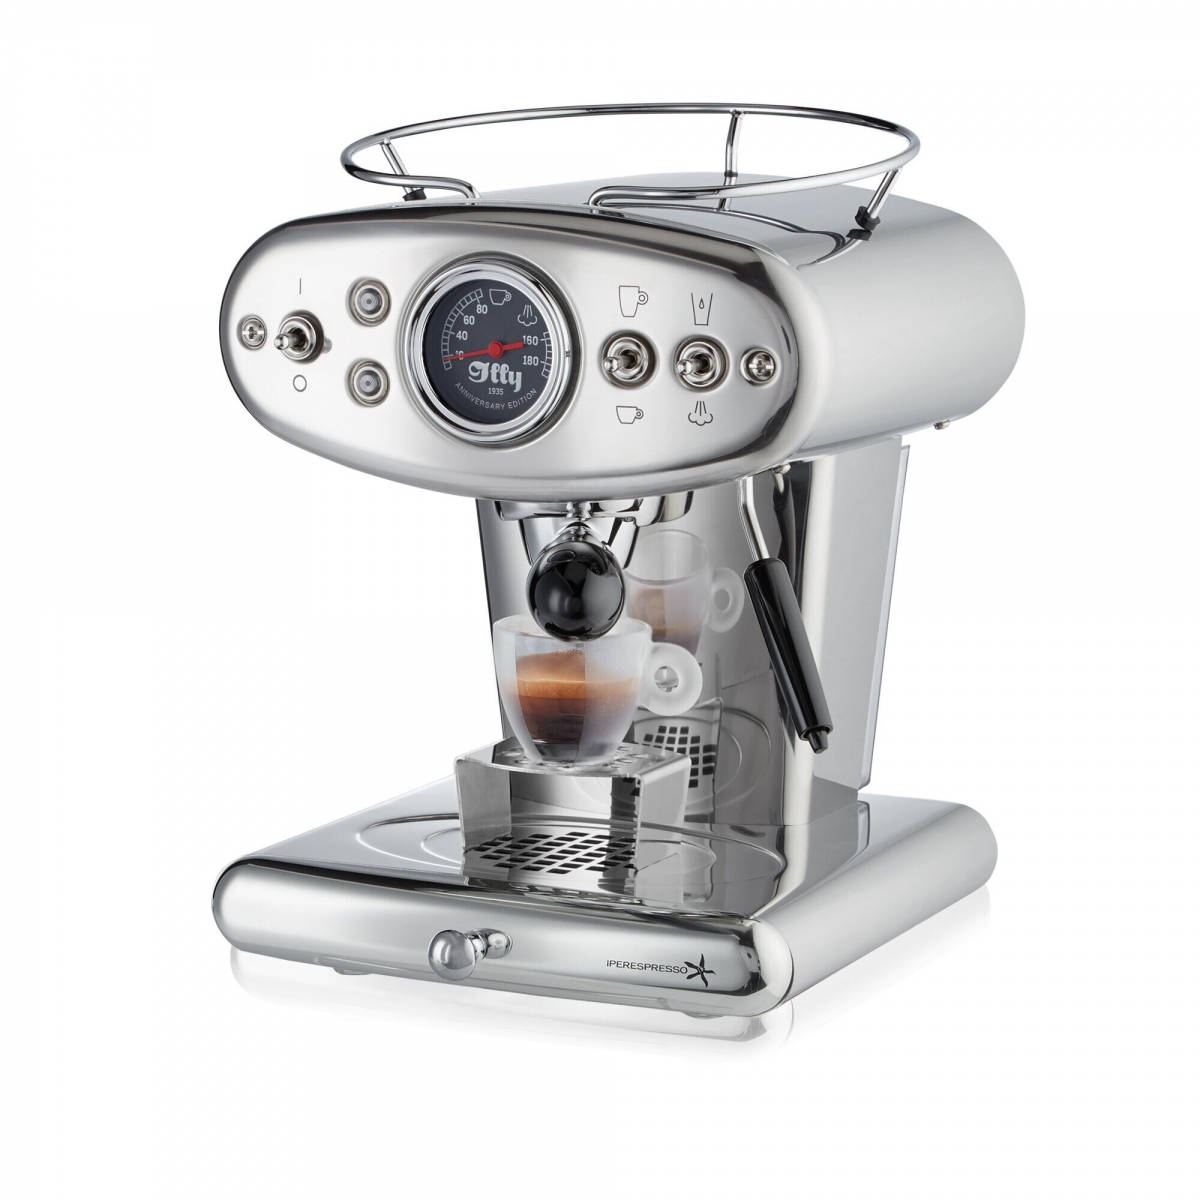 Francis!/Francis X 1 (NEW) espresso machine